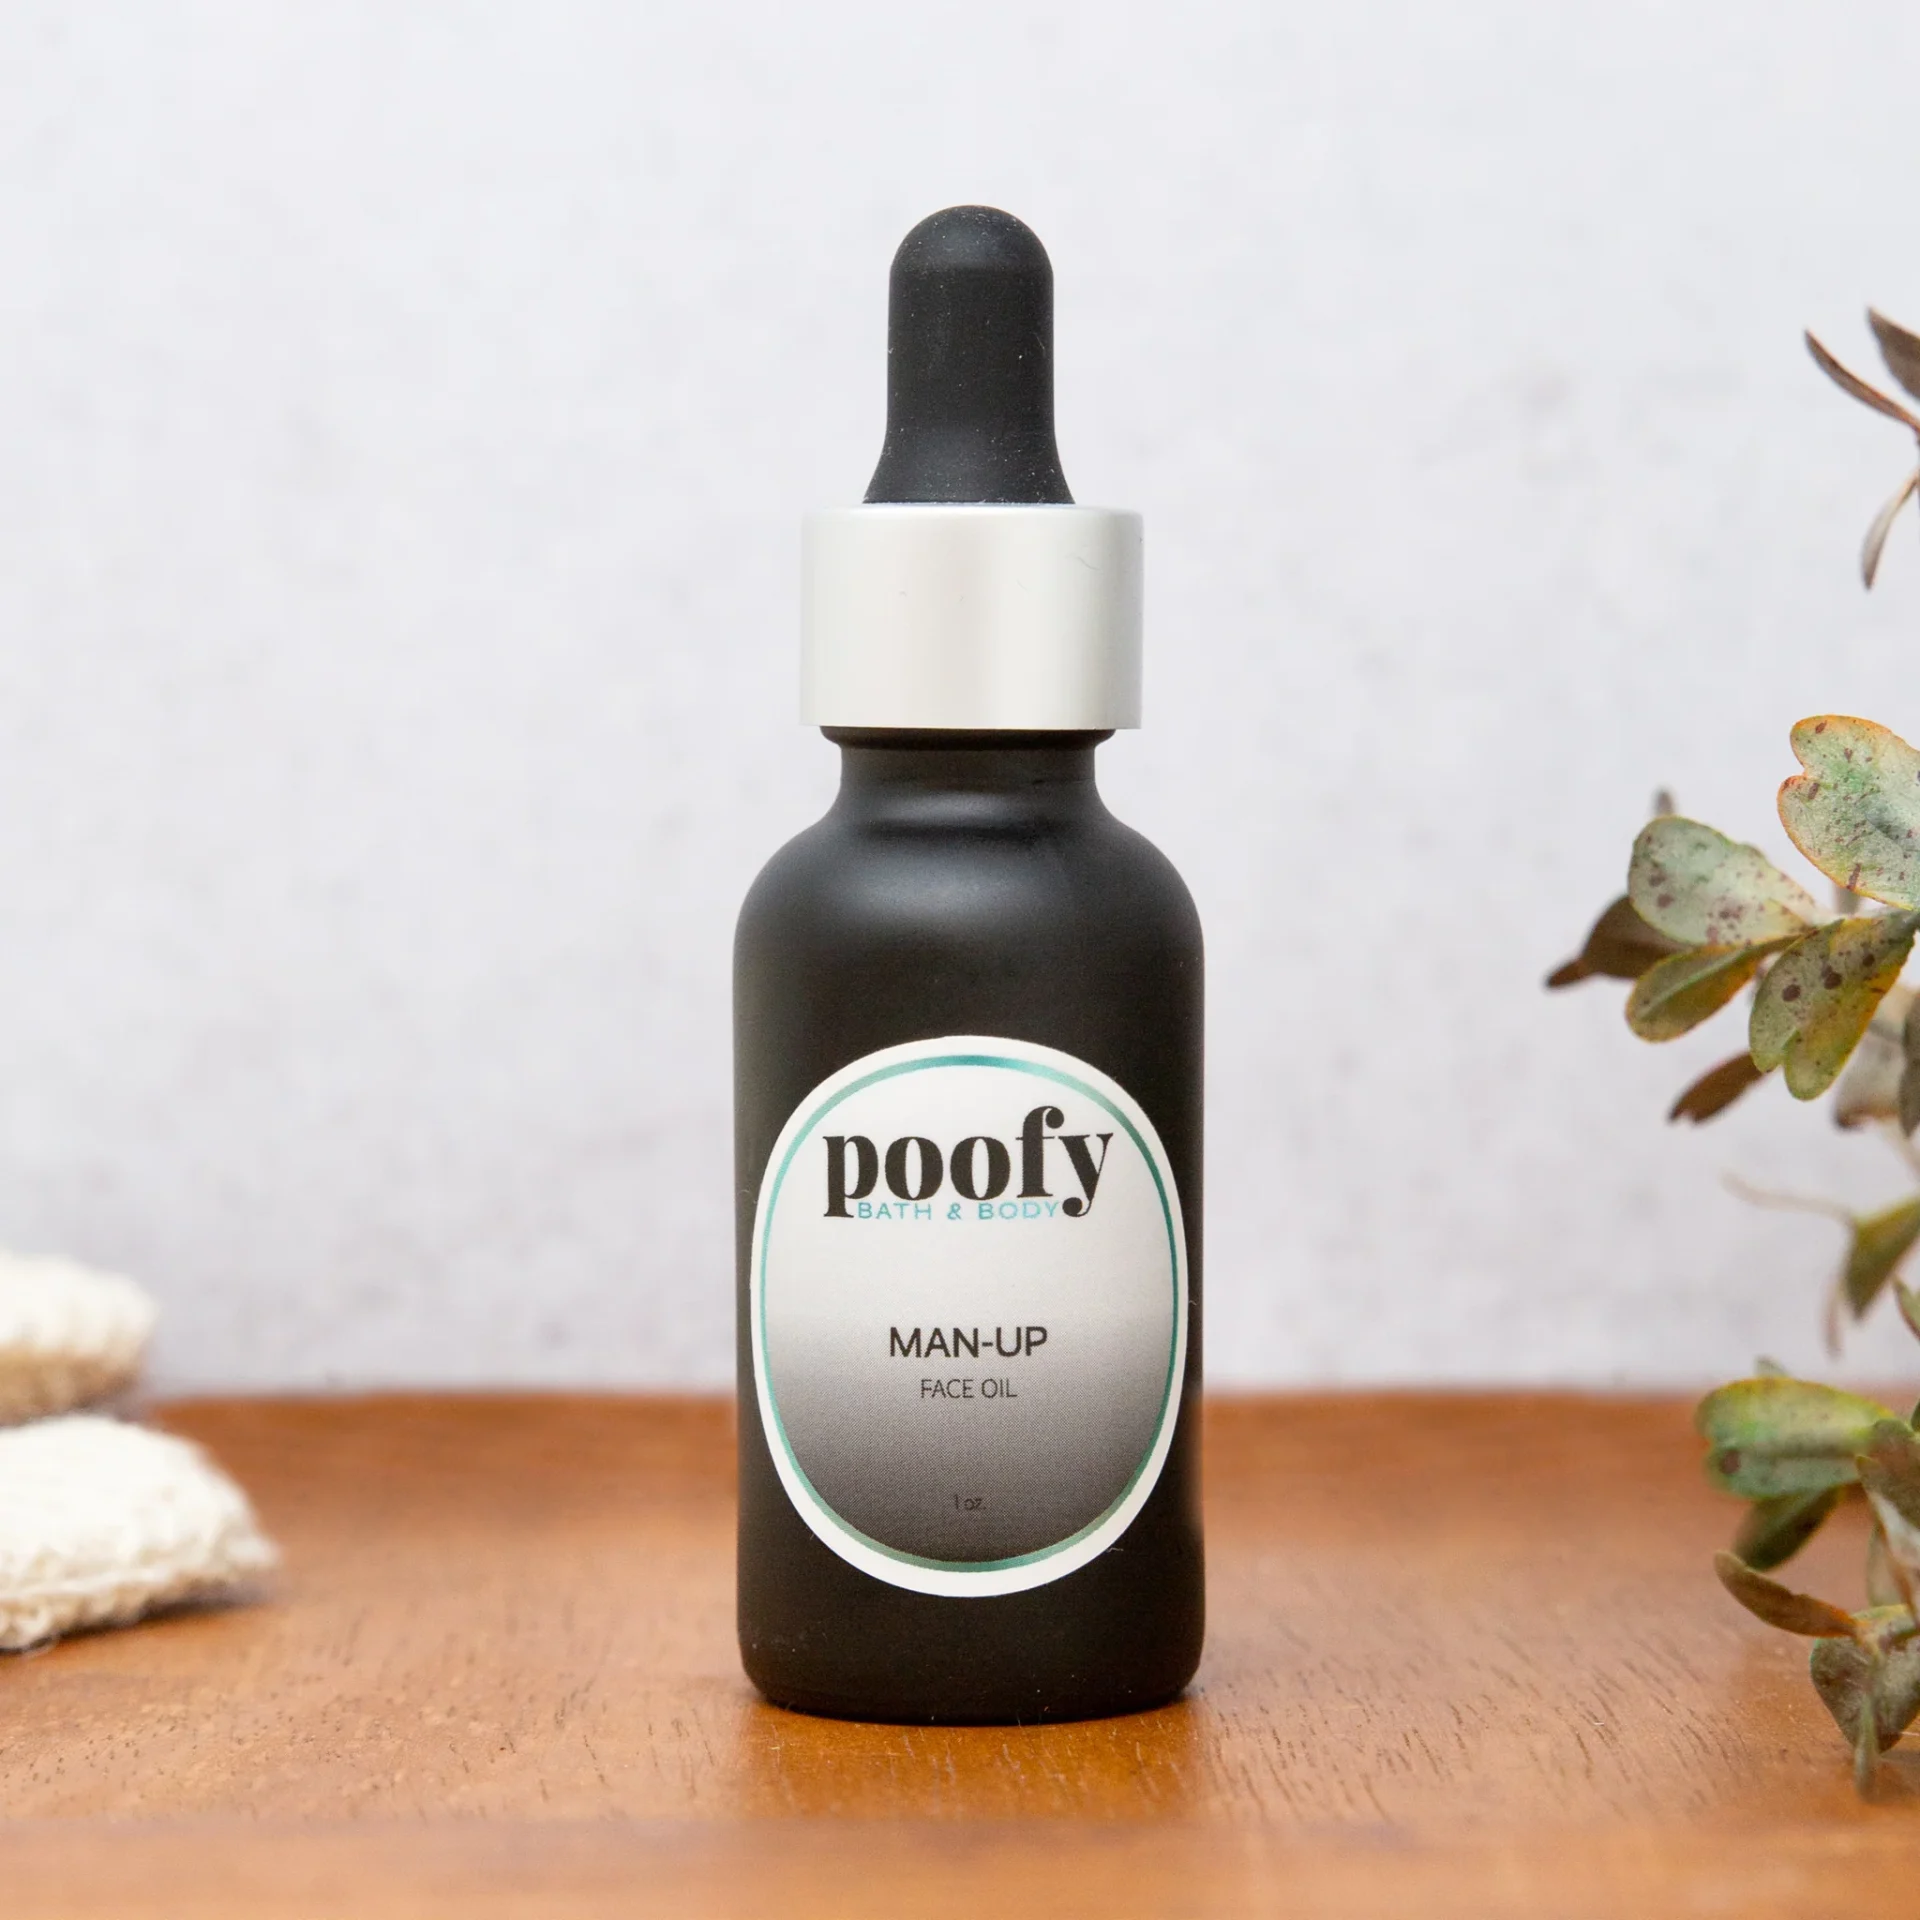 Poofy Organics Man-Up Face Oil promo code